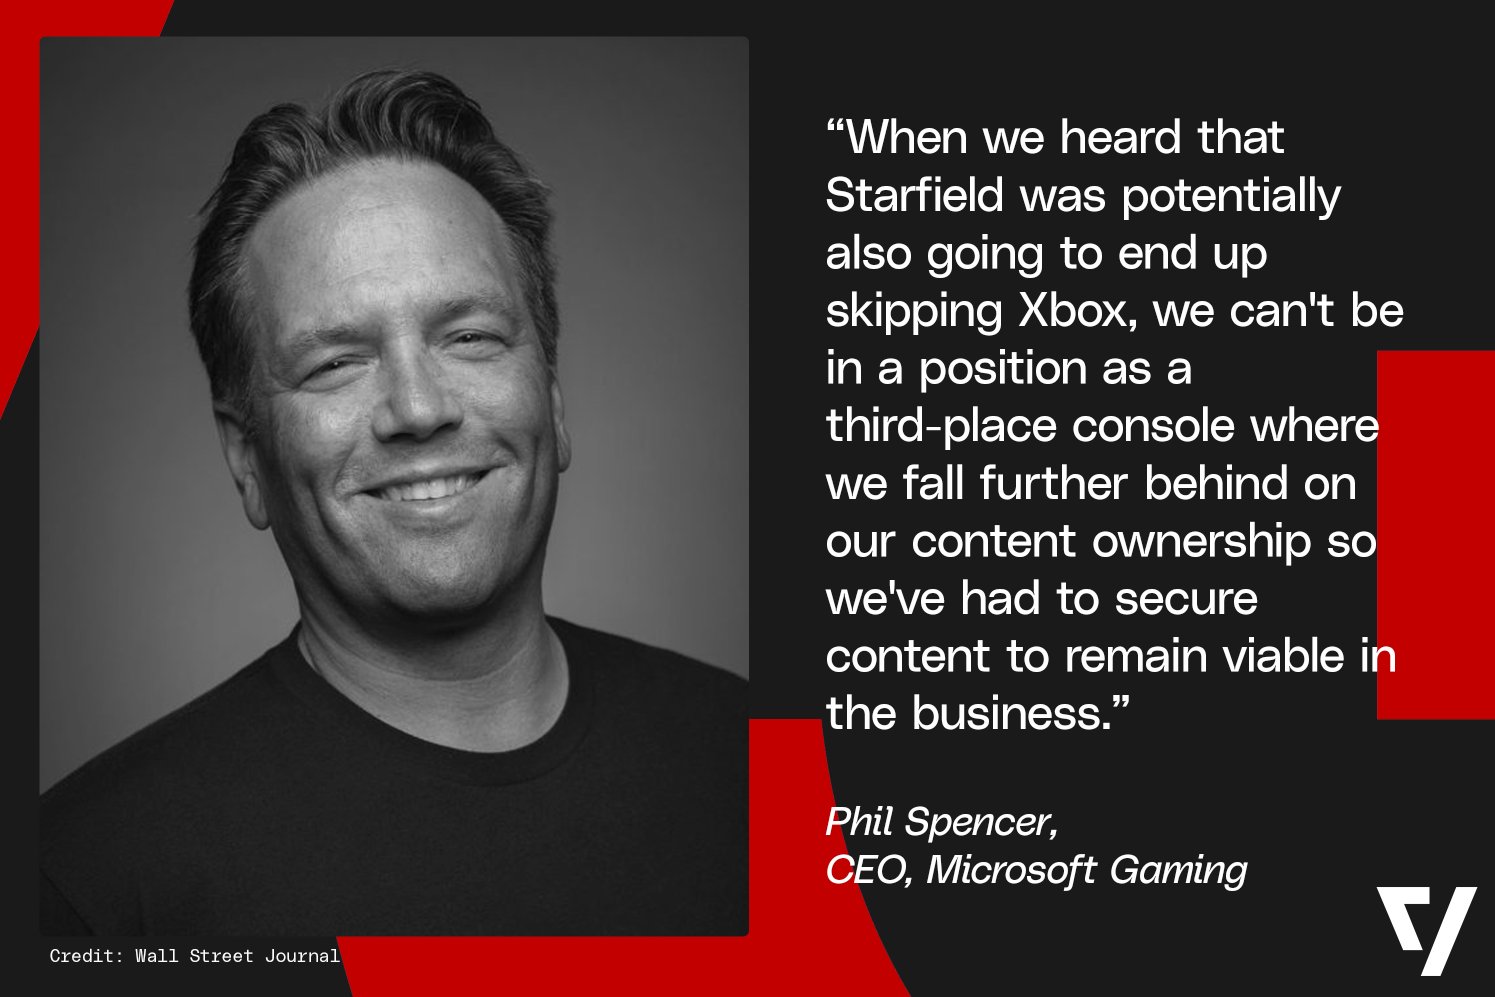 Microsoft Gaming CEO Phil Spencer: Microsoft heard Starfield might